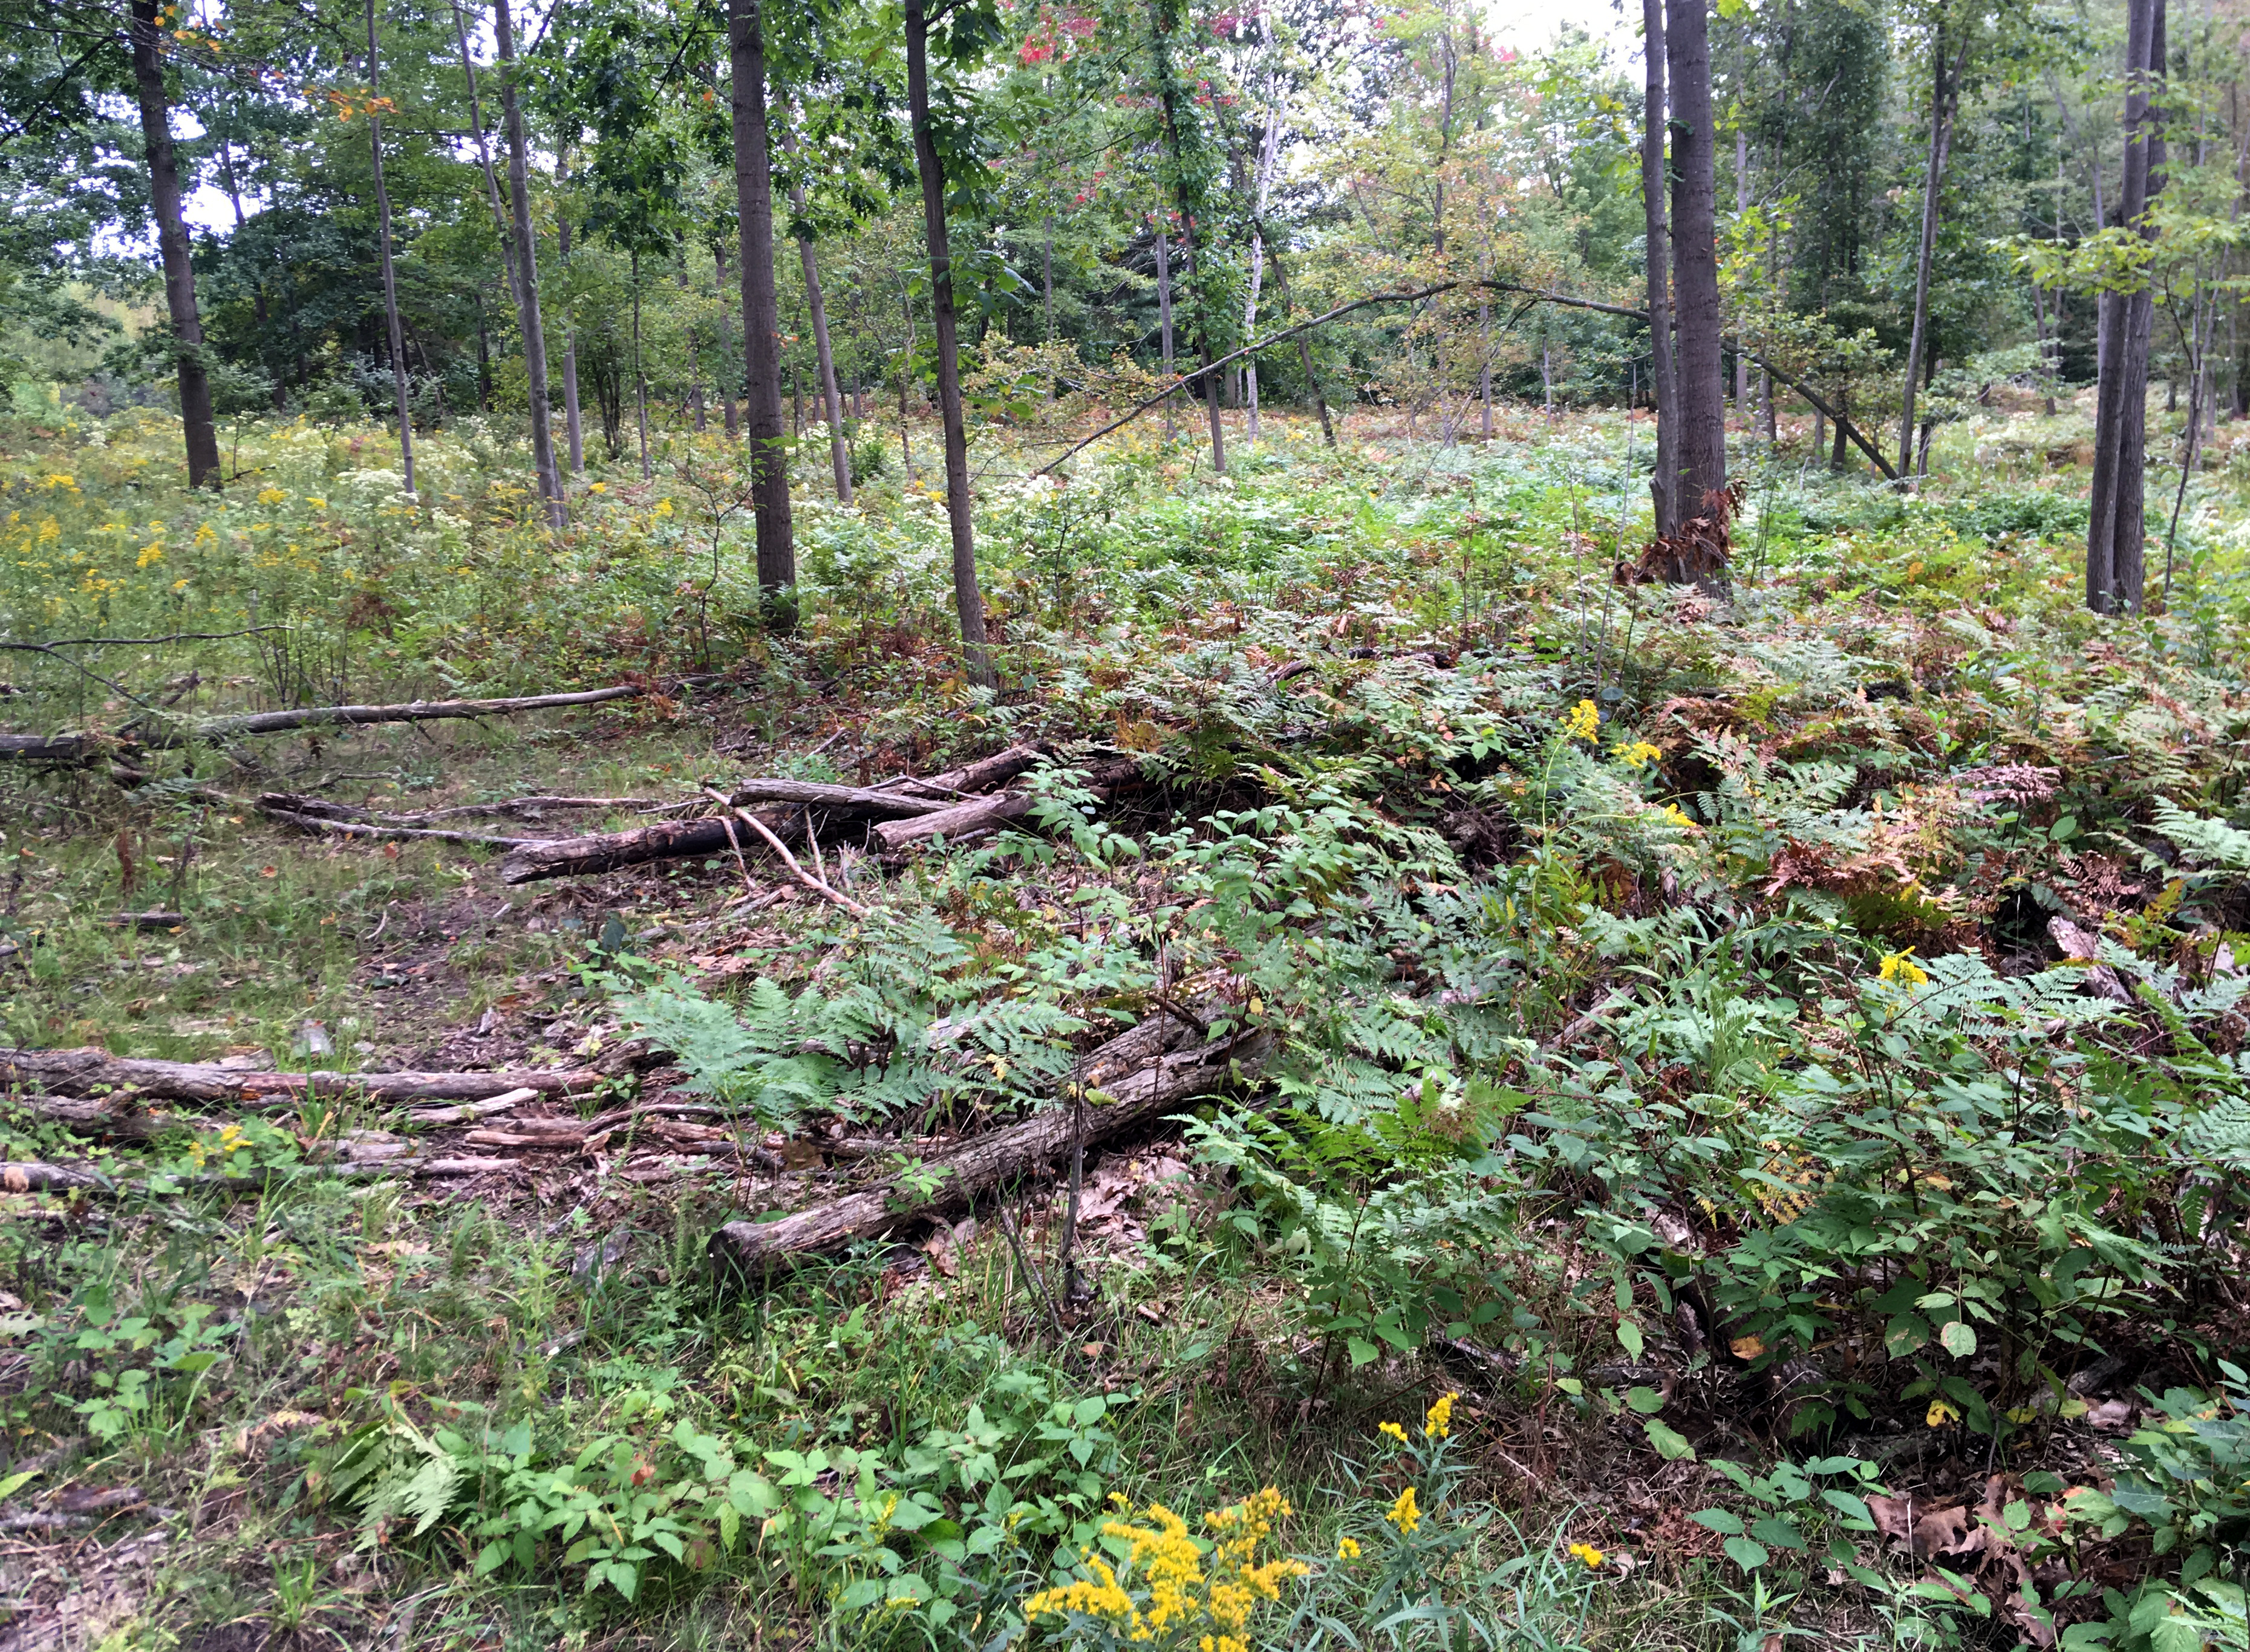 An example of logging slash